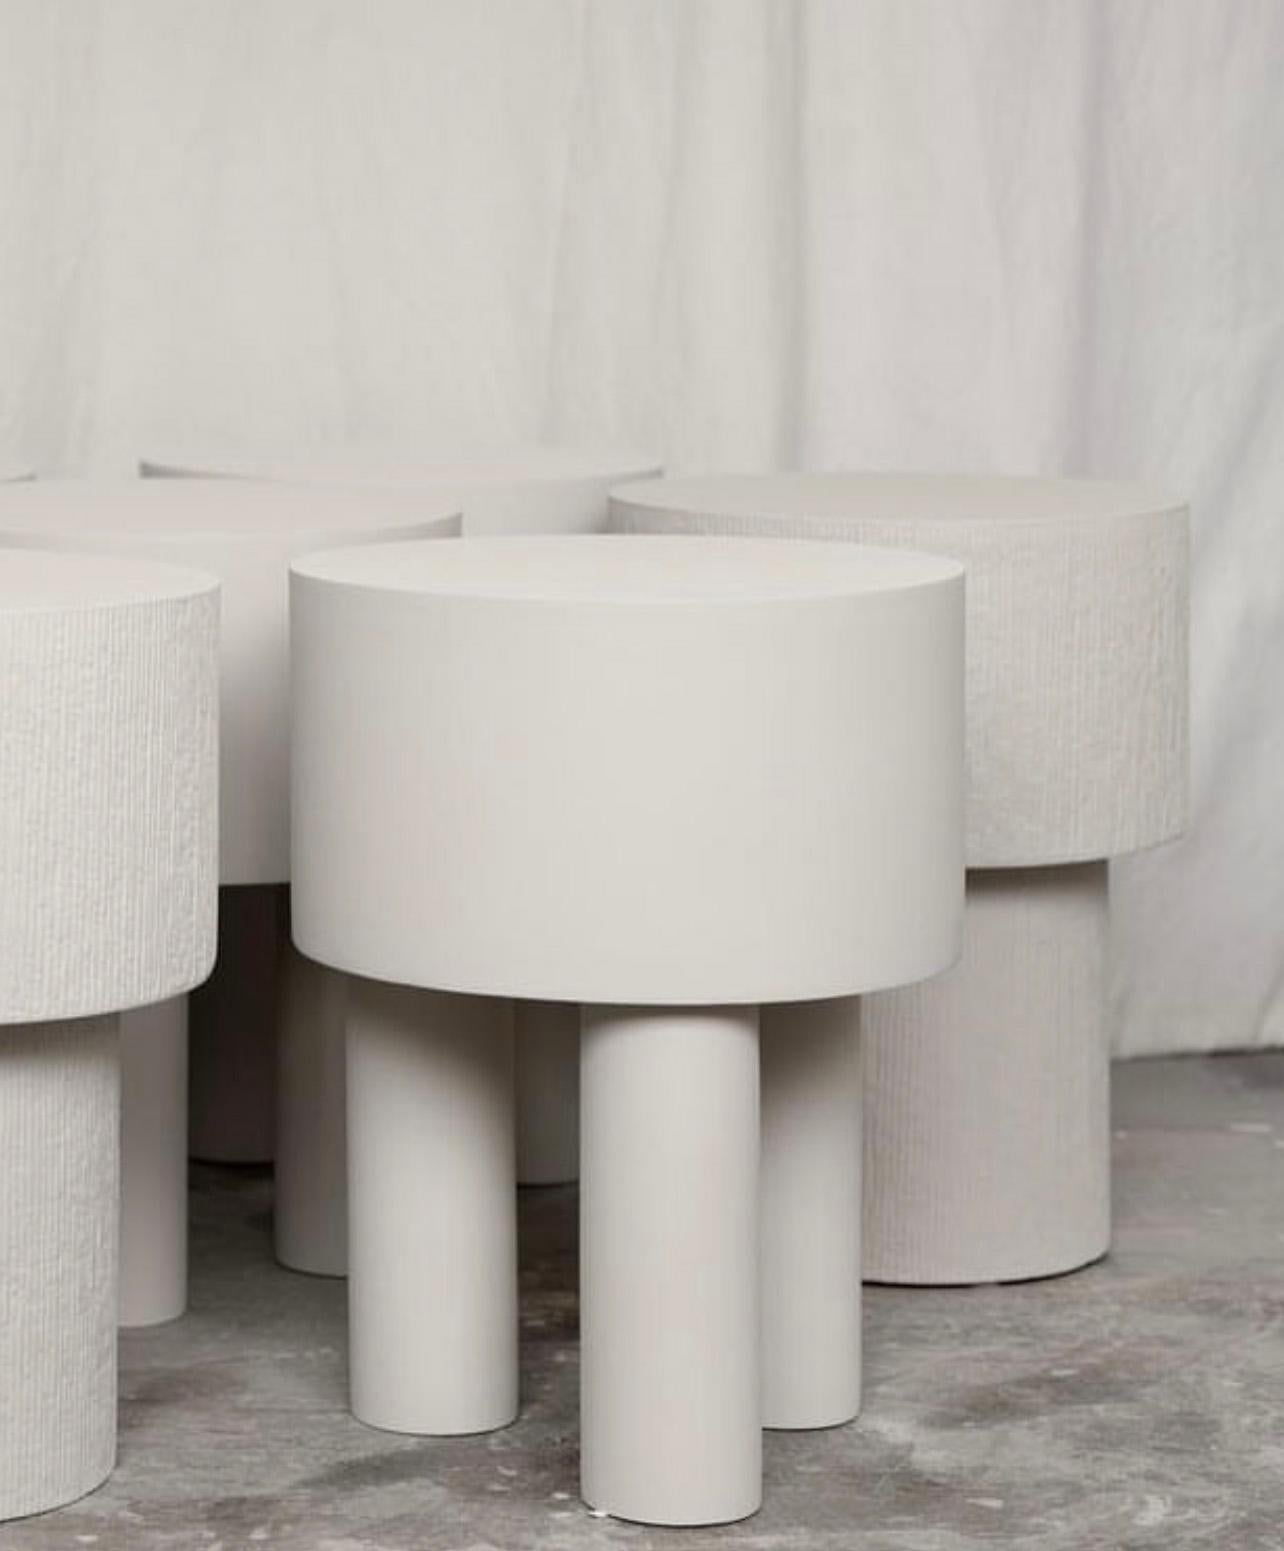 British Contemporary Clay Jesmonite Side Table, Pilotis 3 legs by Malgorzata Bany For Sale